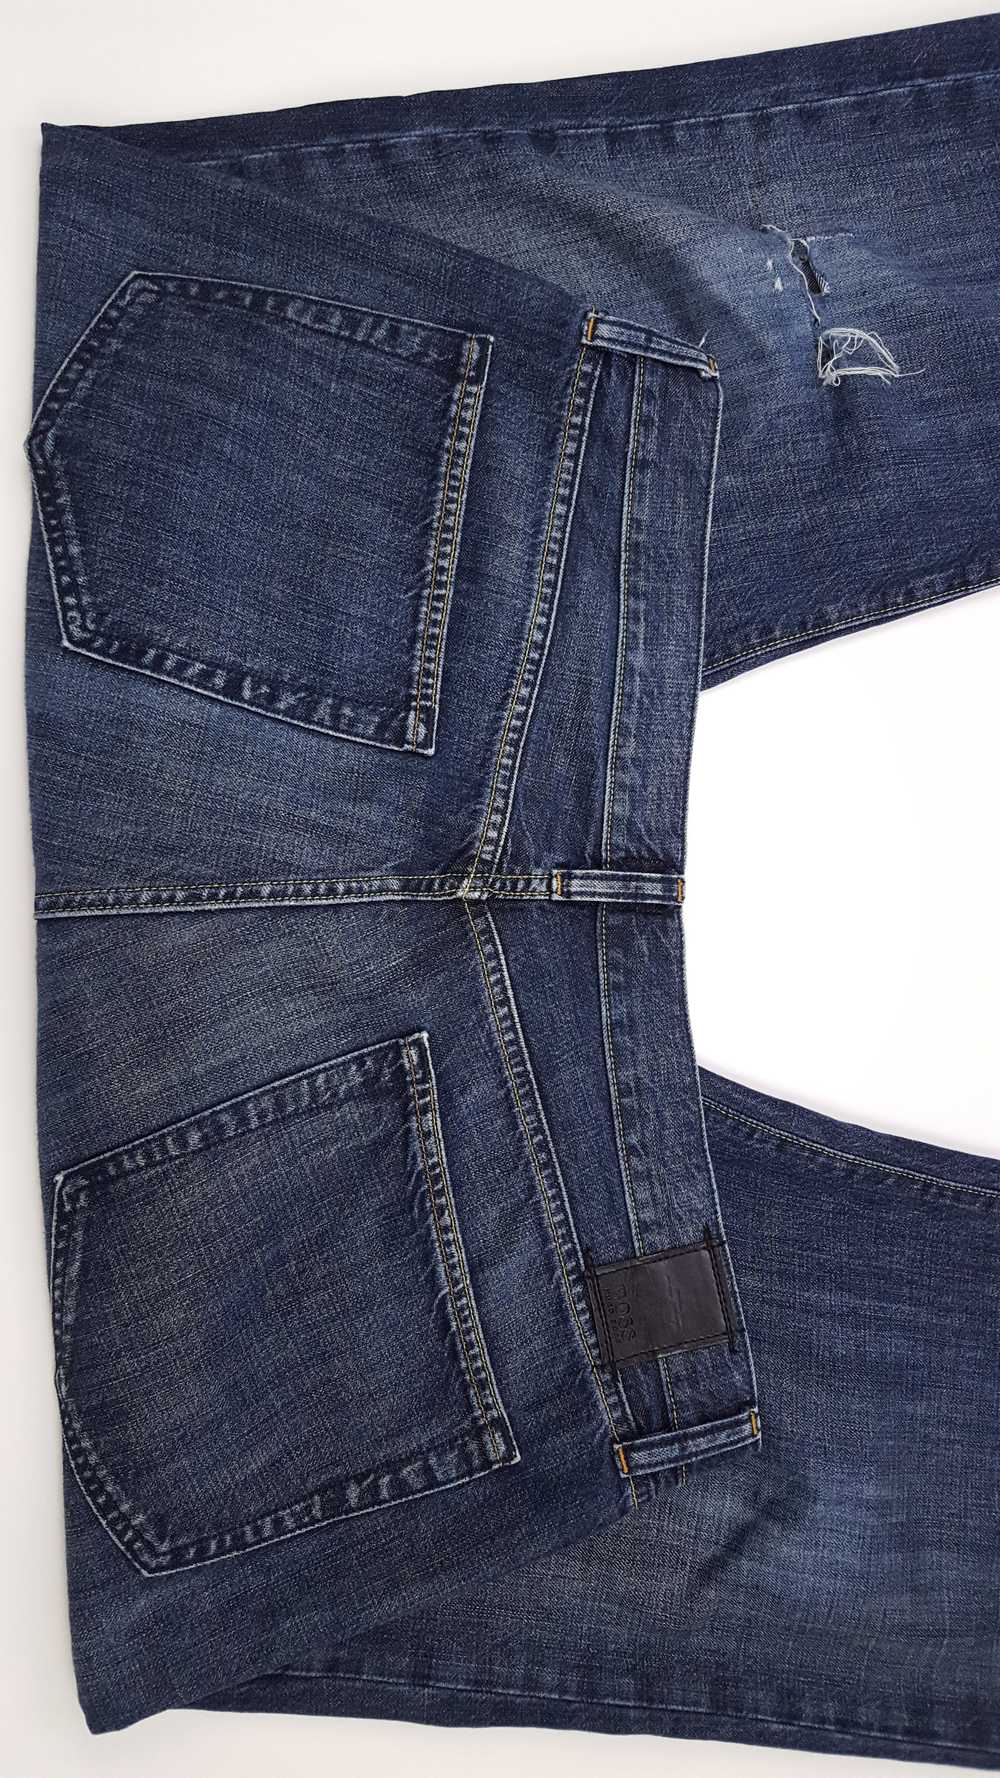 Hugo Boss Jackson Jeans - image 9